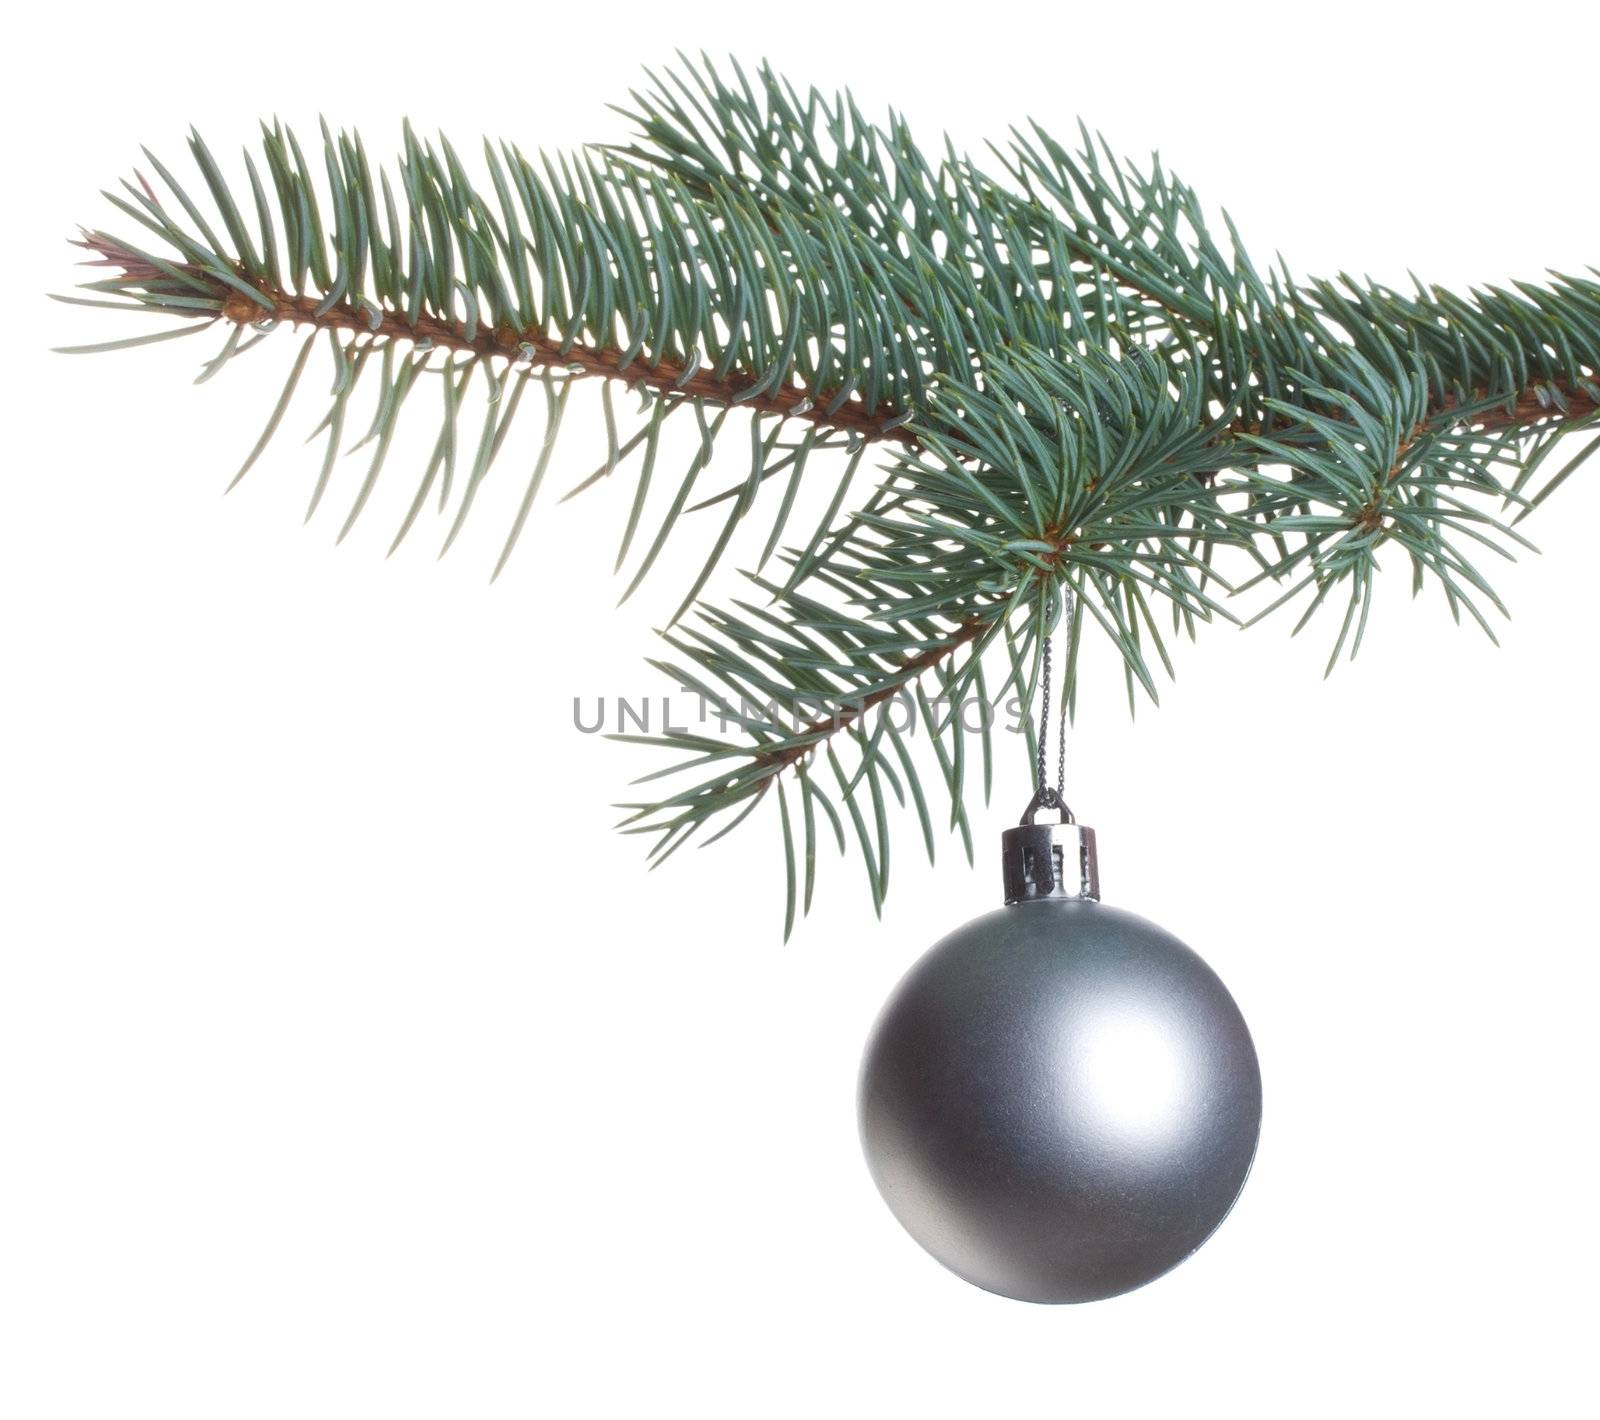 silver ball on fir branch by Alekcey